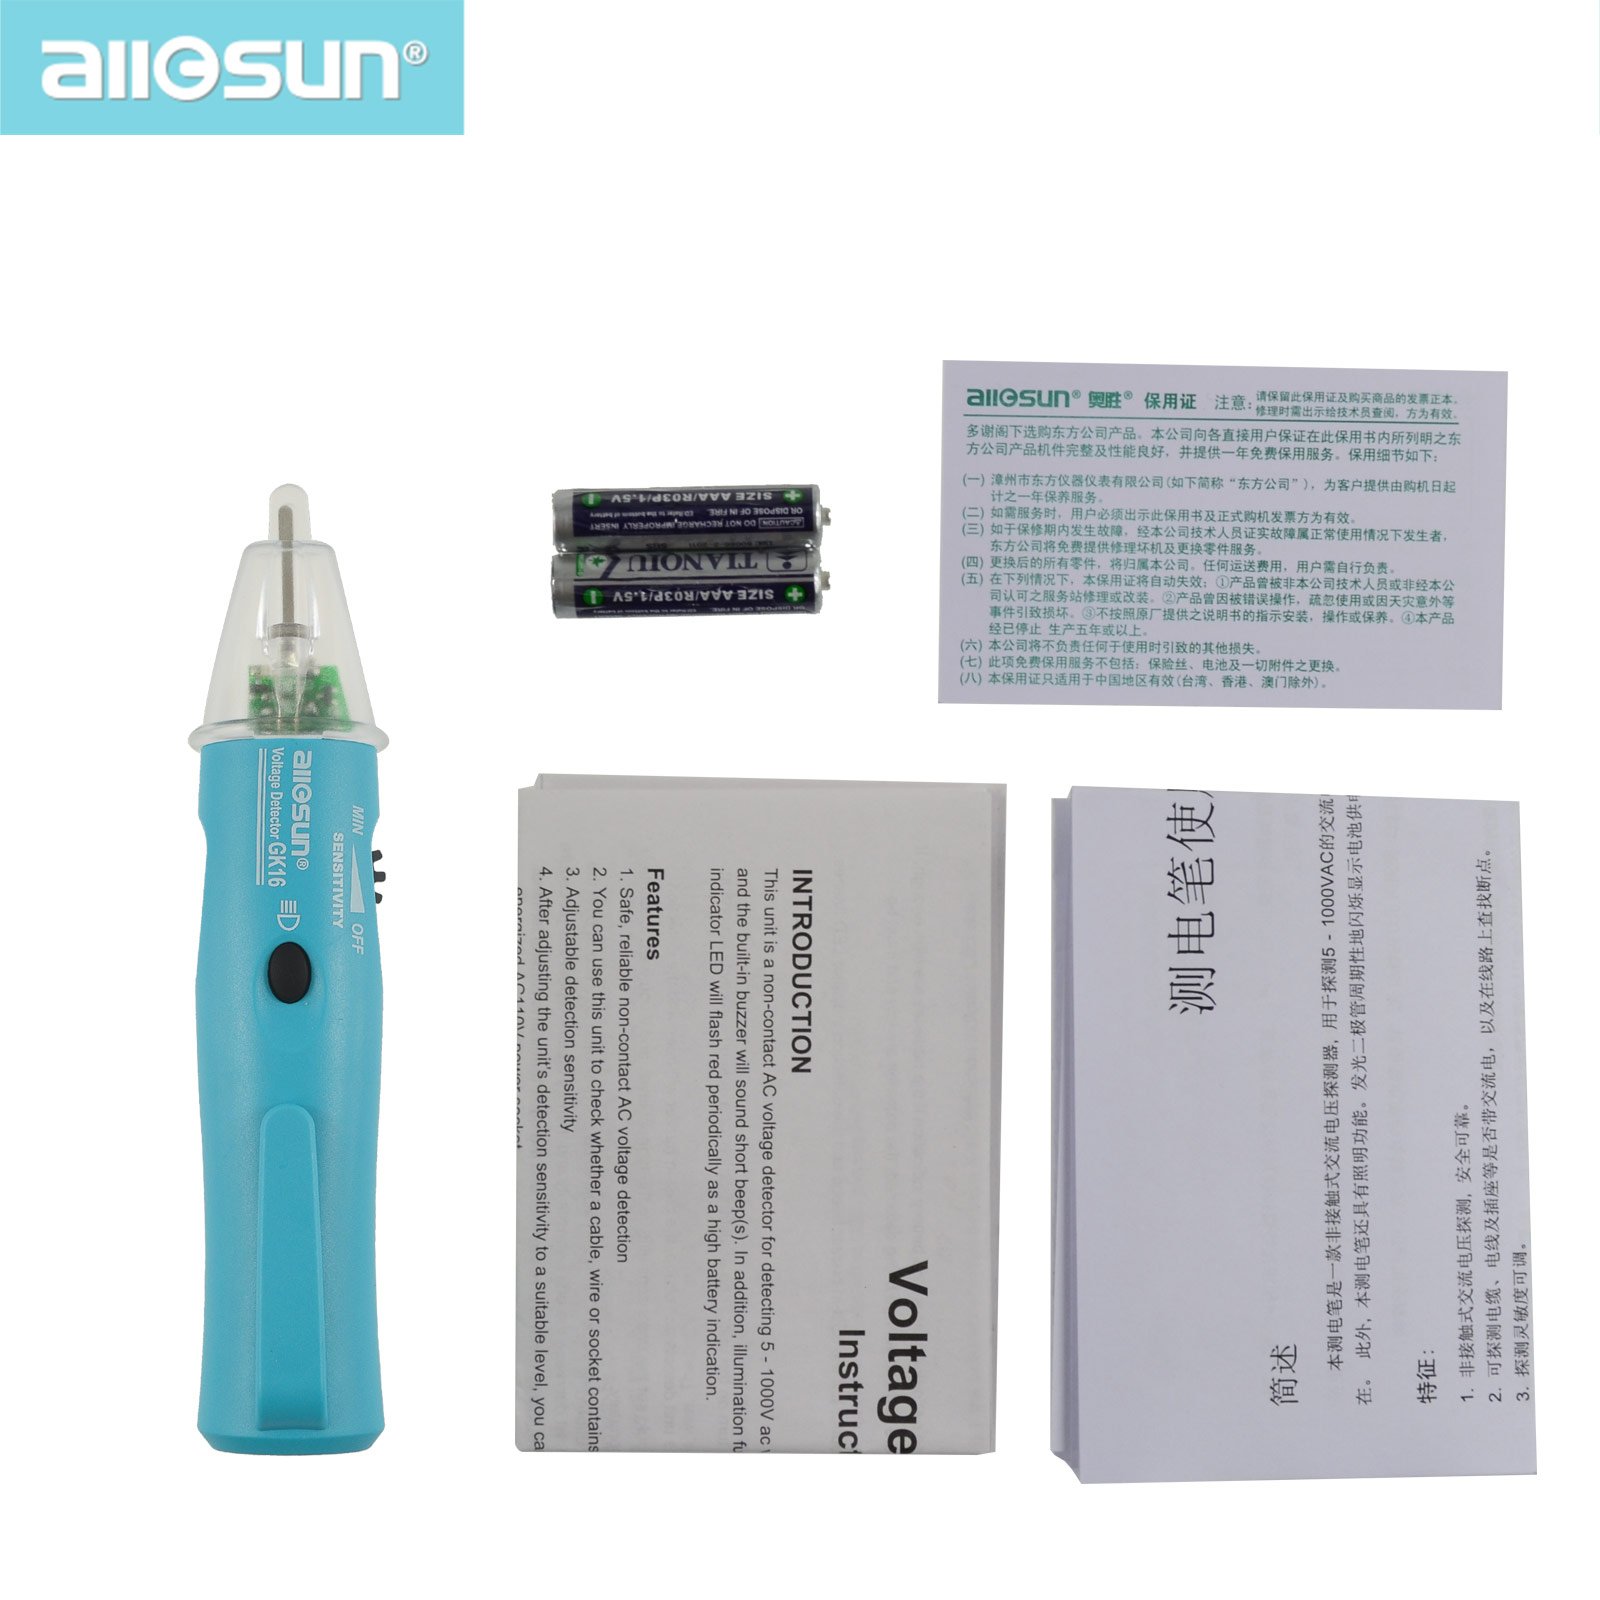 GK16 Non Contact Voltage Detector / Electric Pen 50Hz-400Hz AC 5V-1000V with Adjustable Sensitivity and Flashlight